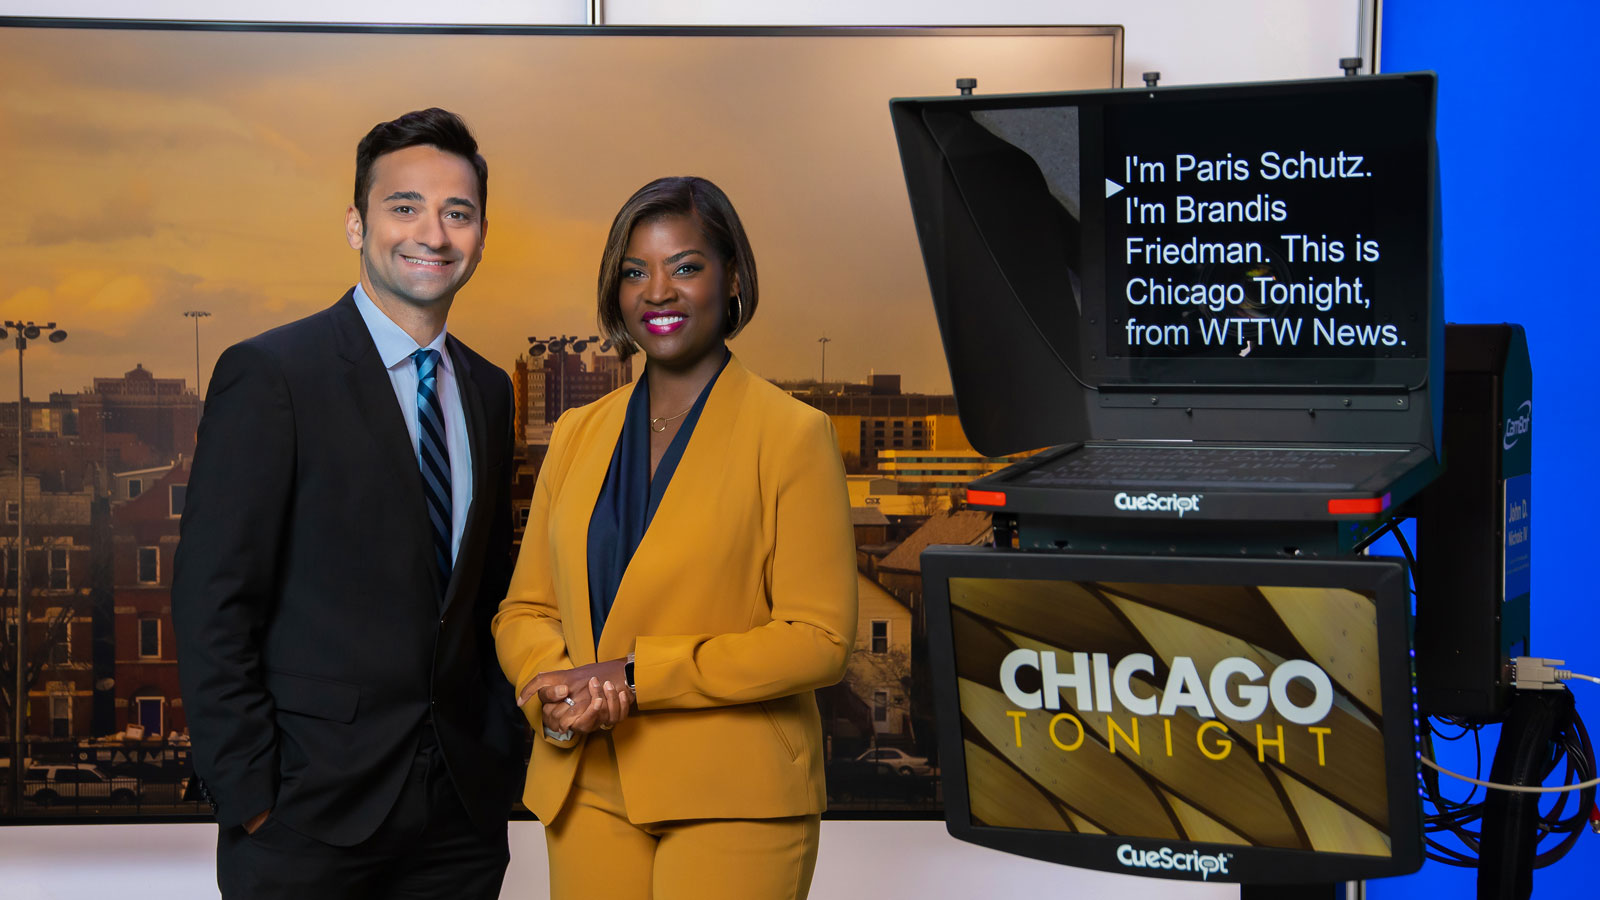 Brandis Friedman and Paris Schutz host an episode of “Chicago Tonight”